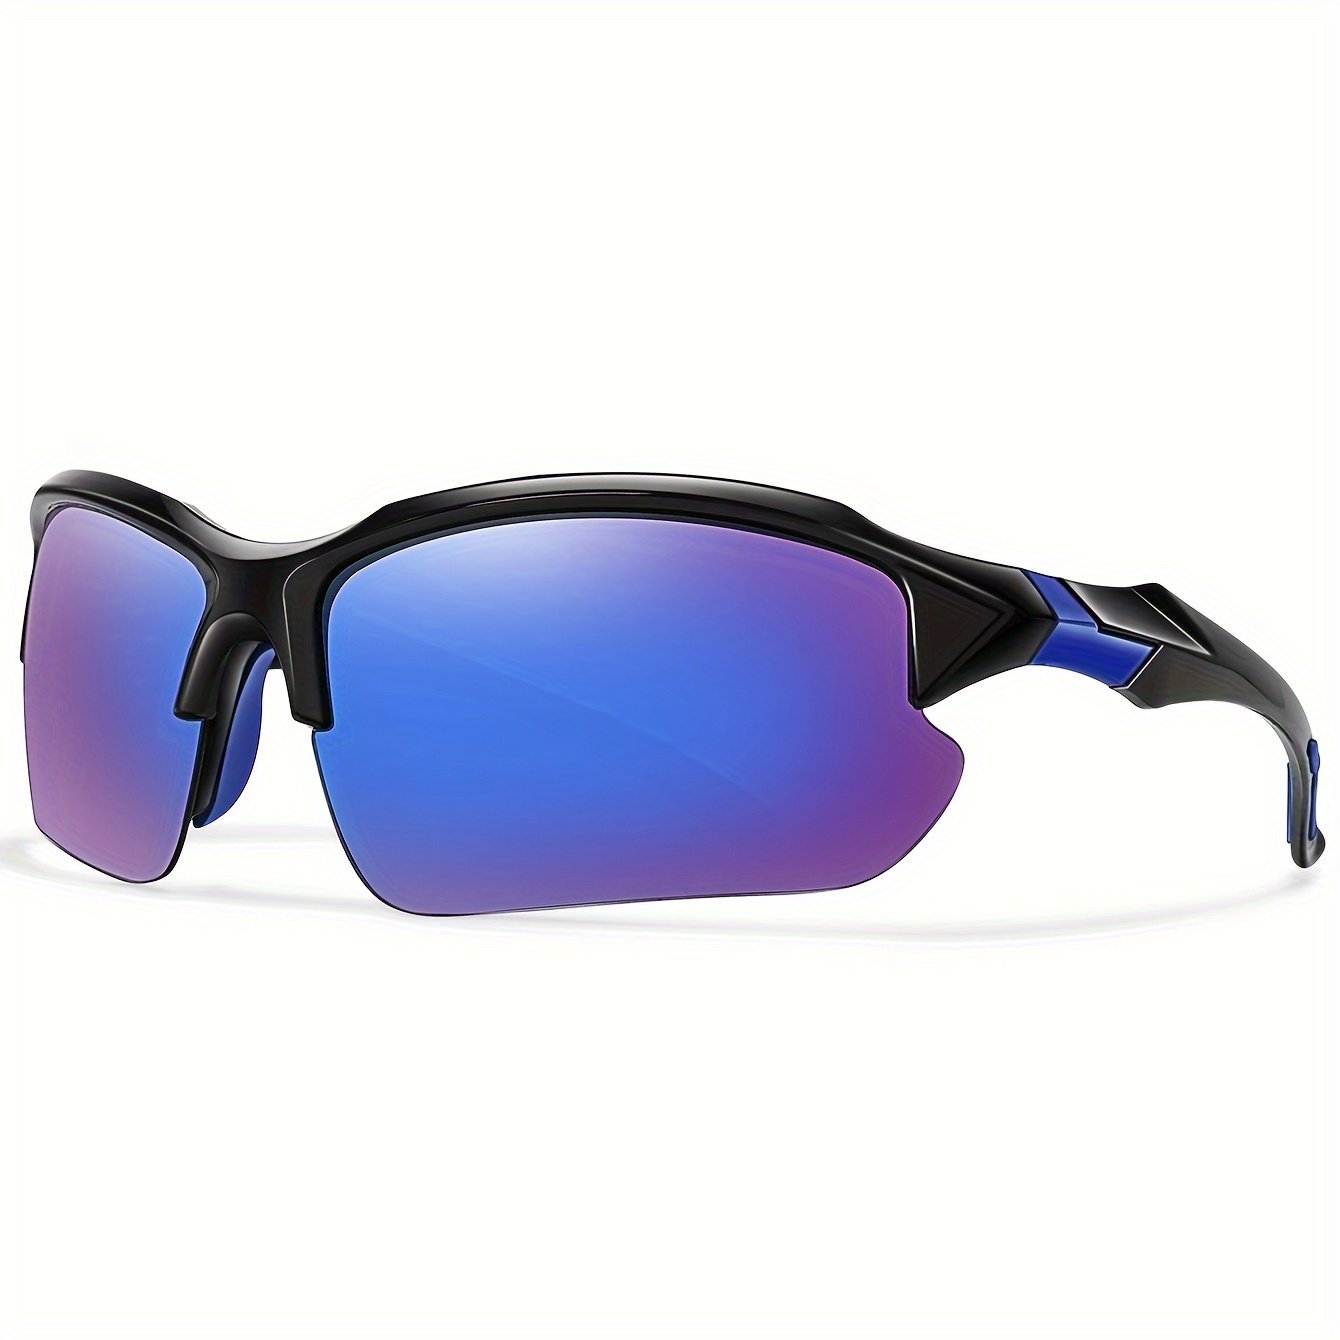 Polarized Wrap Around Sports Sunglasses for Men Driving Baseball